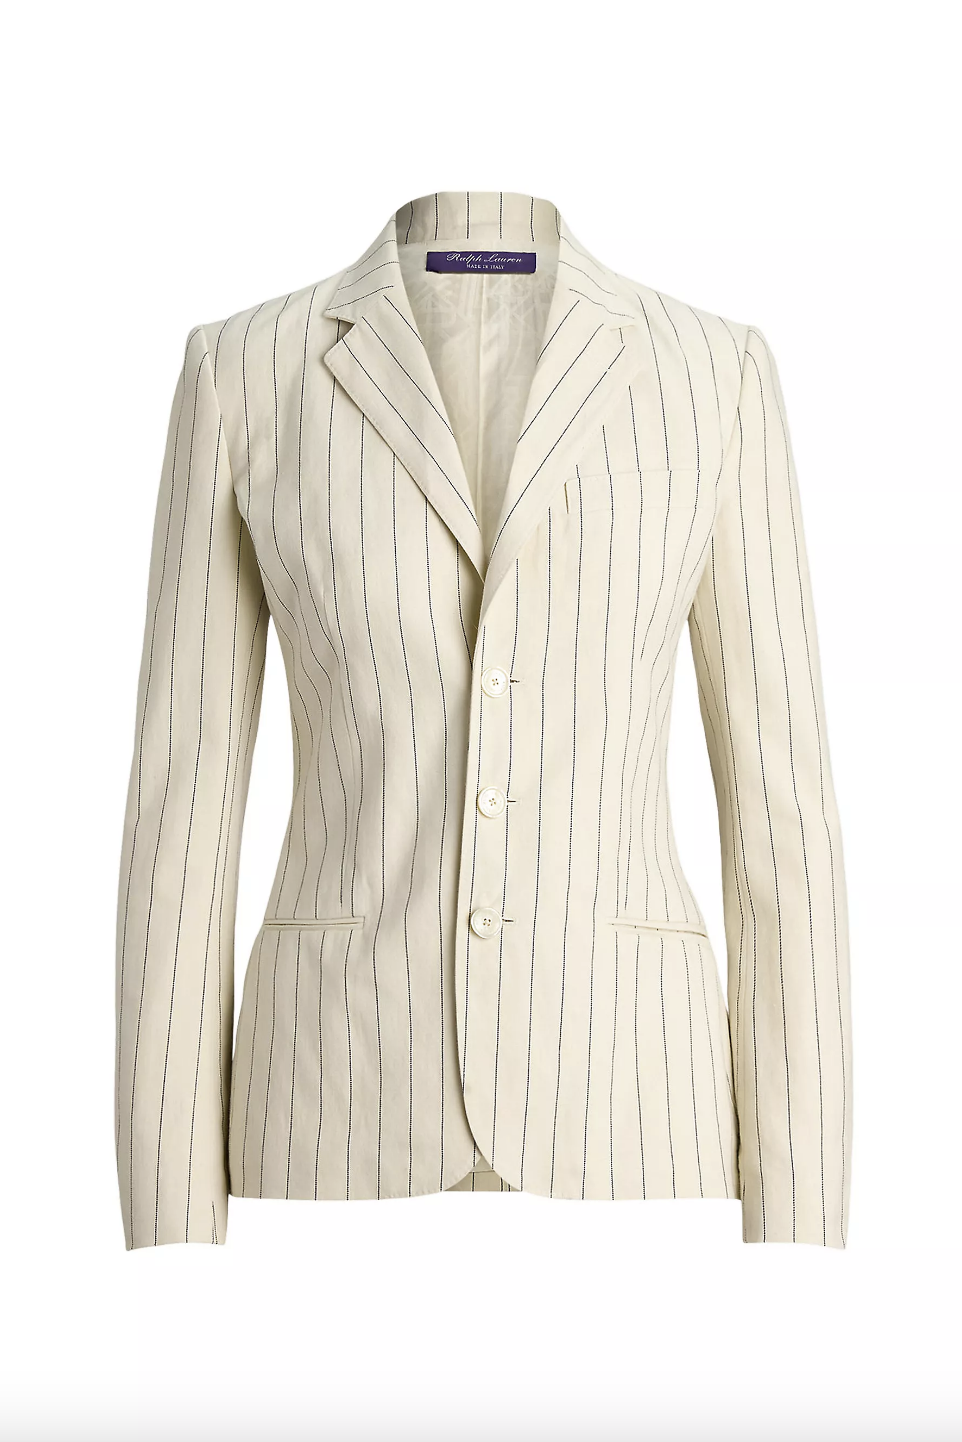 Ralph Lauren Collection Skye Pinstriped Cotton & Linen Blazer